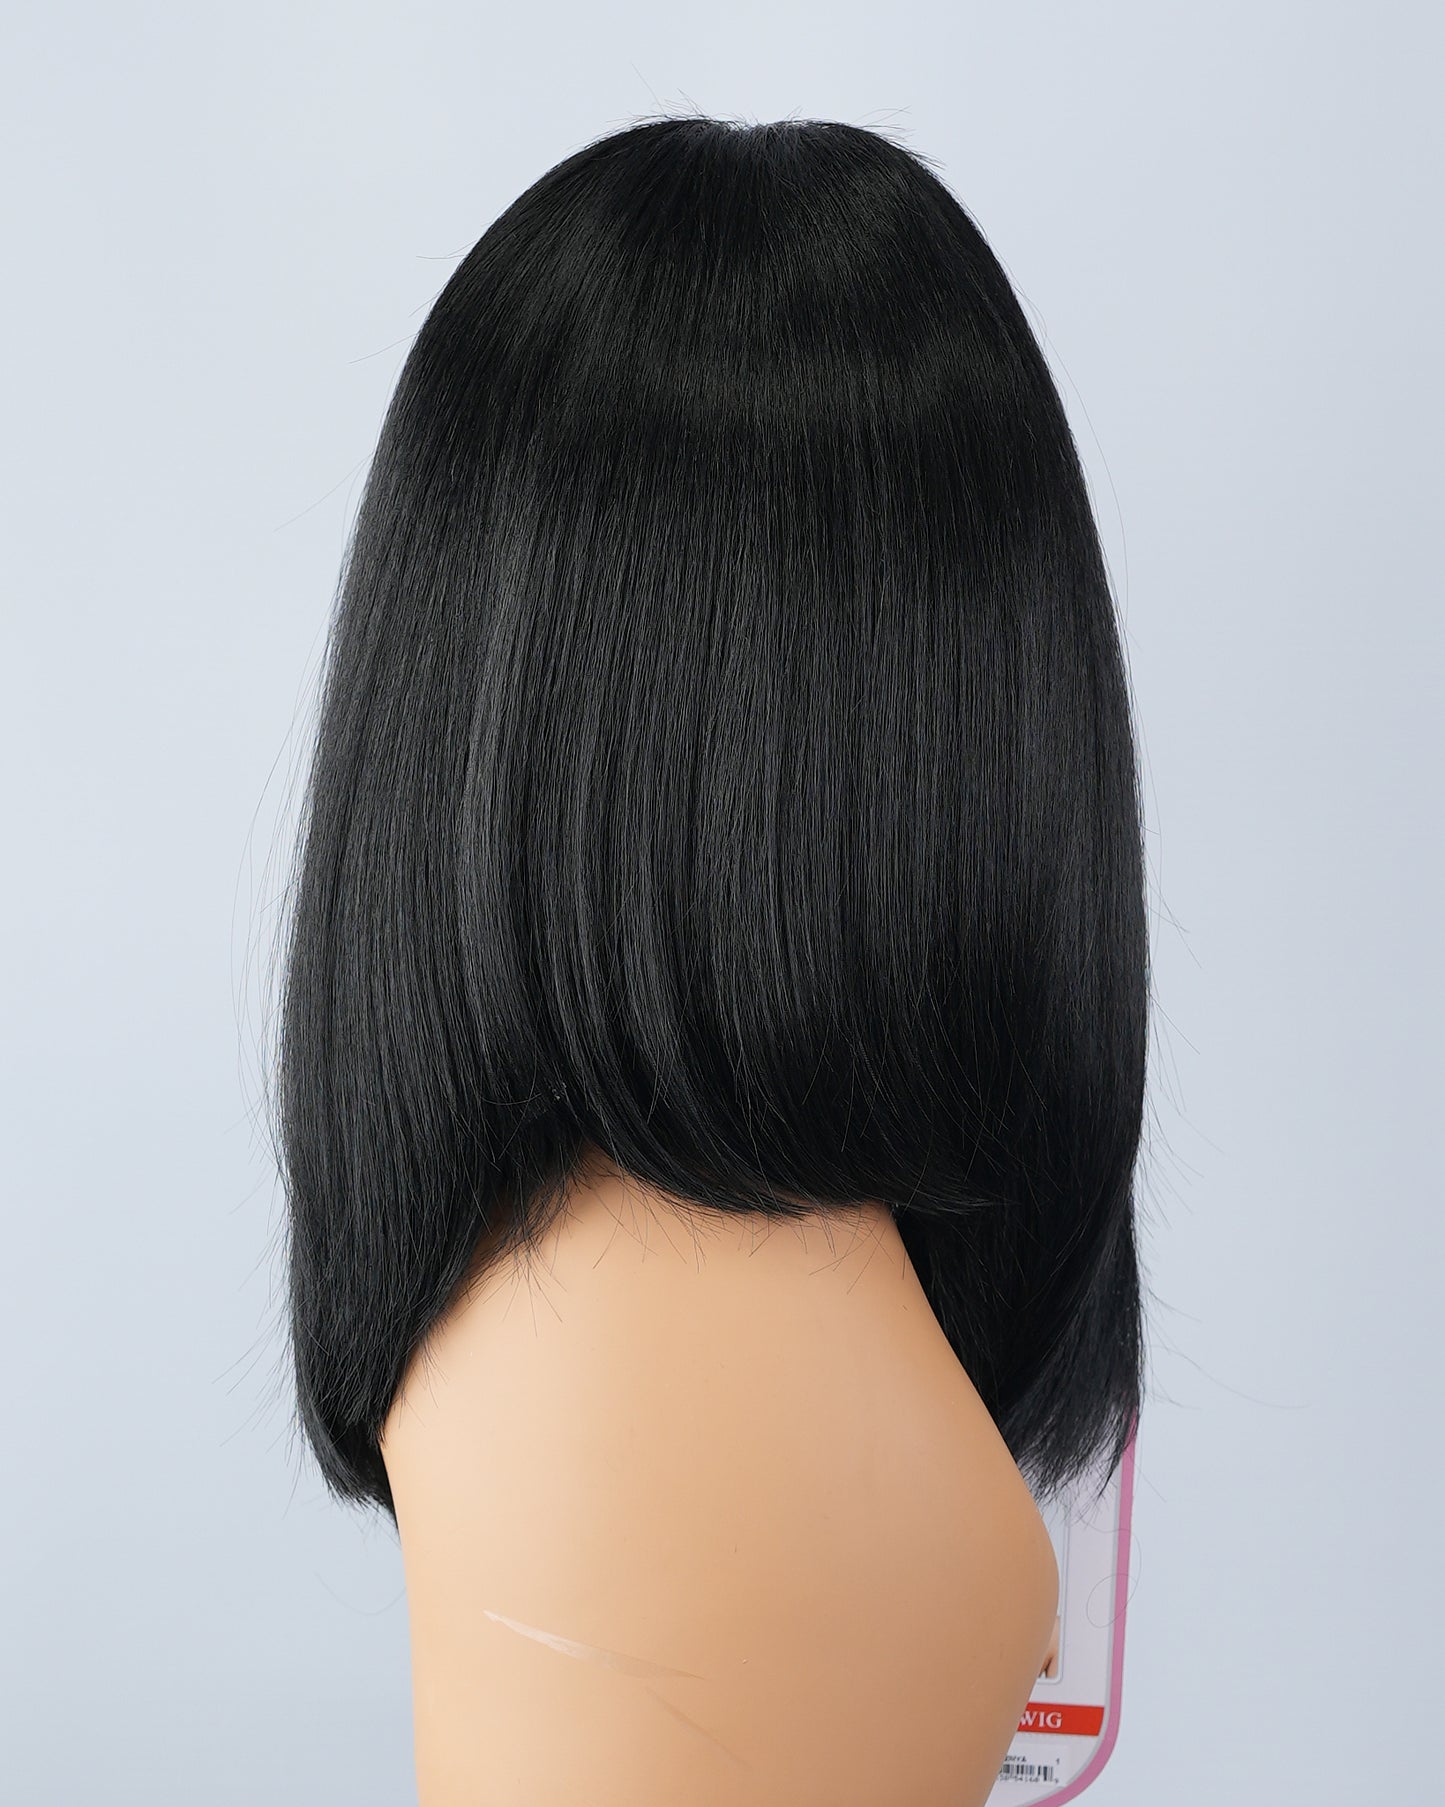 Bobbi Boss® MLF211 Kenya Straight Premium Synthetic Fiber Lace Wig